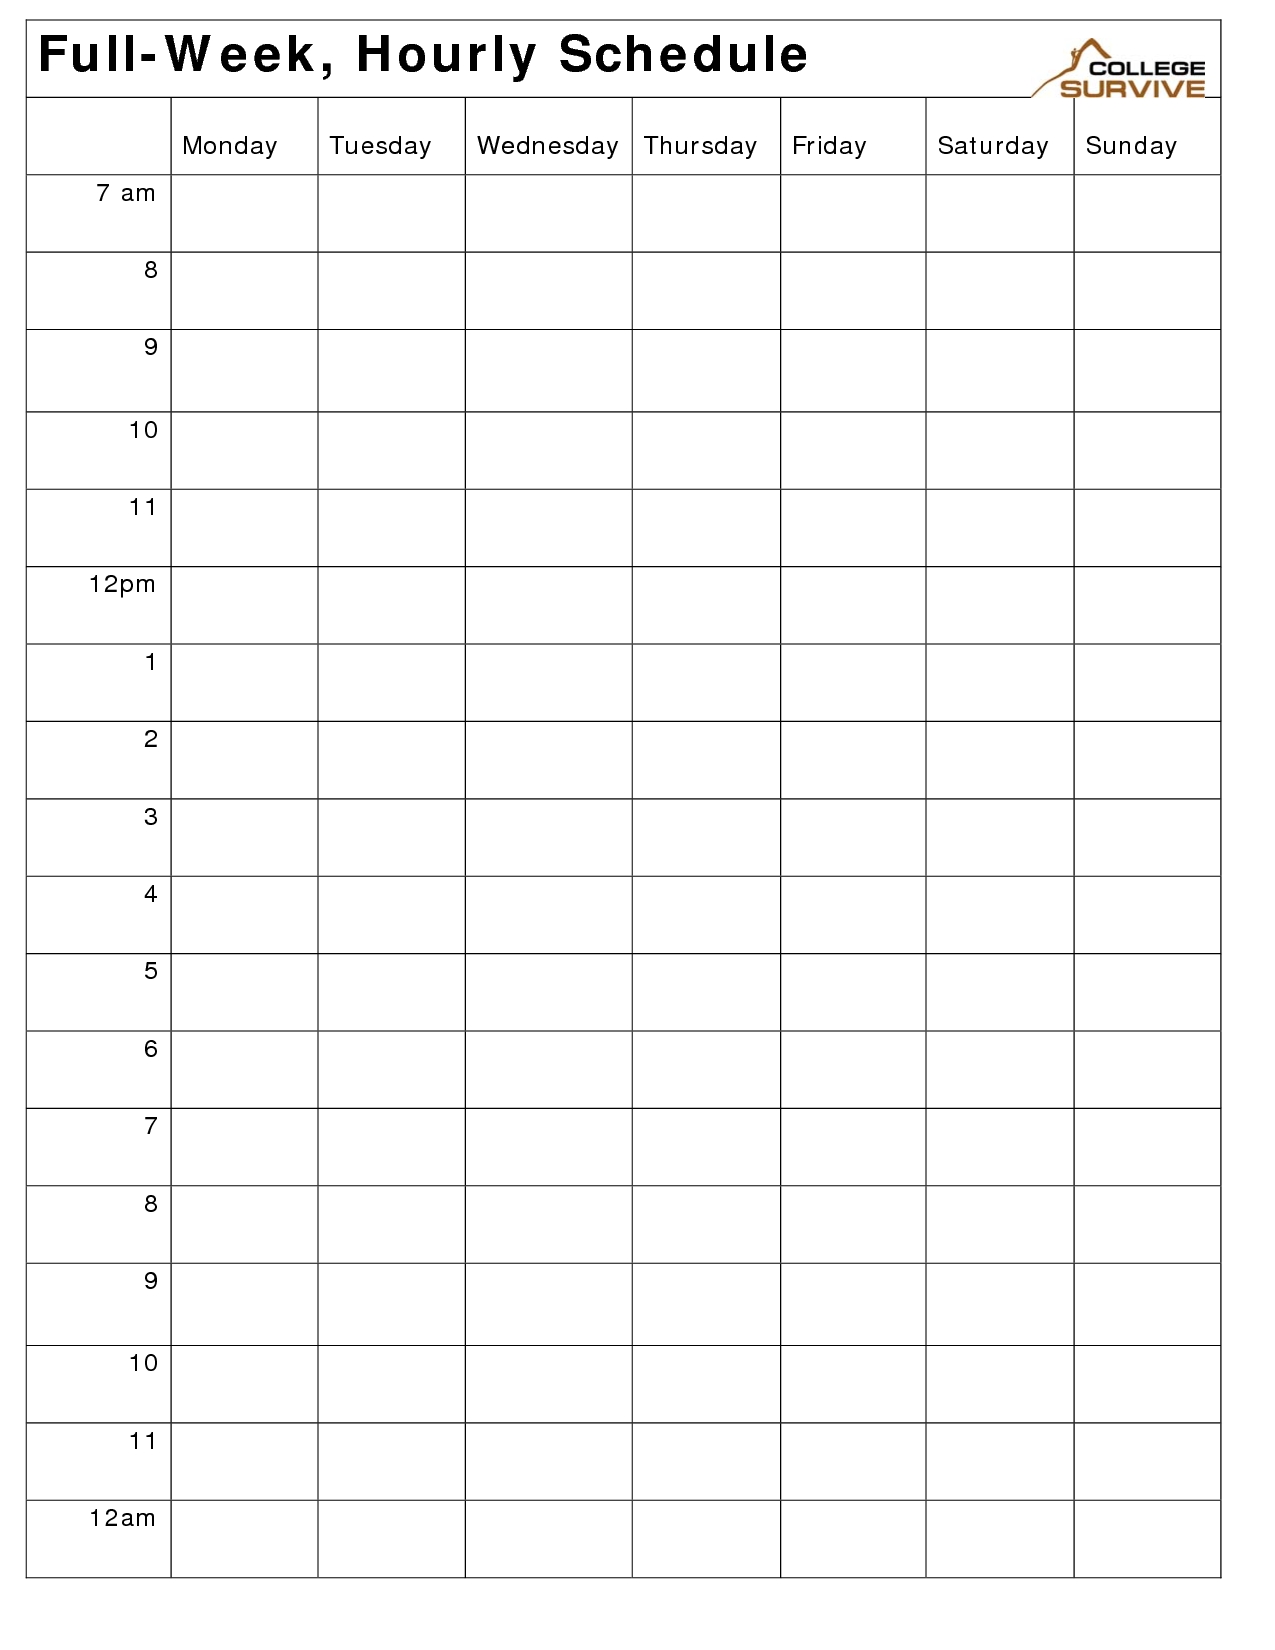 calendar work week schedule time template